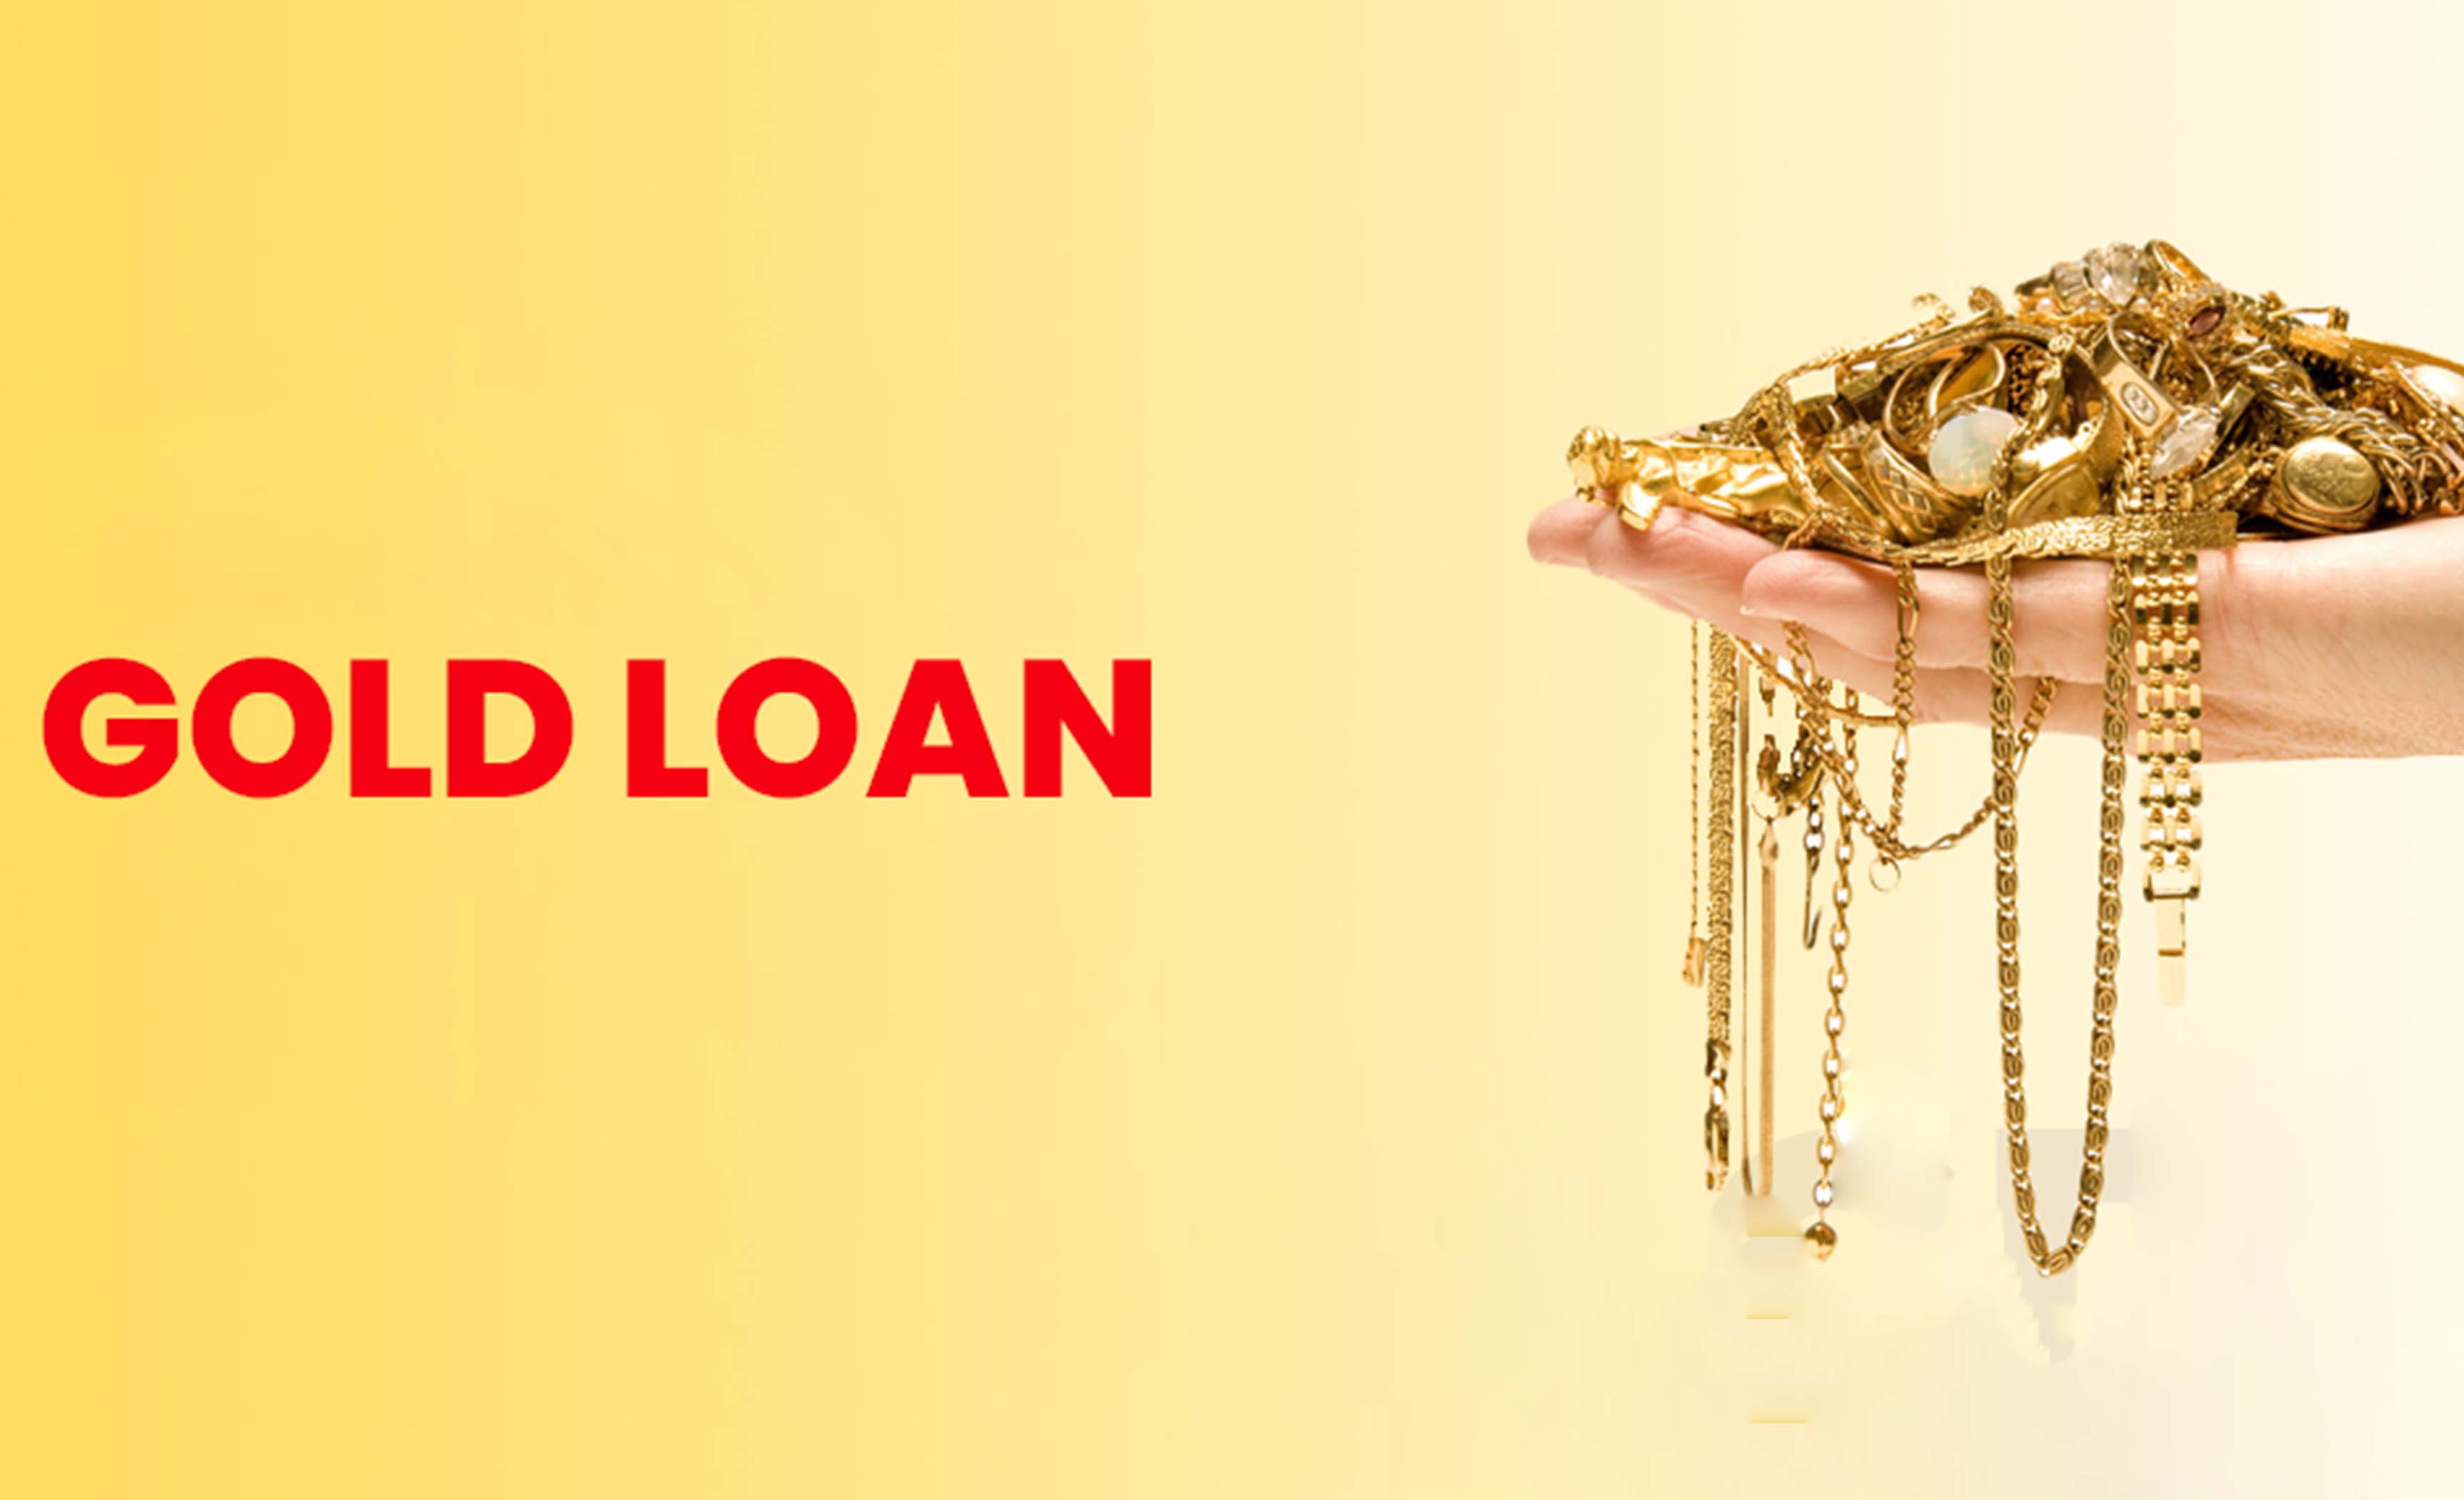 Gold loan - How do Gold Loans Work?